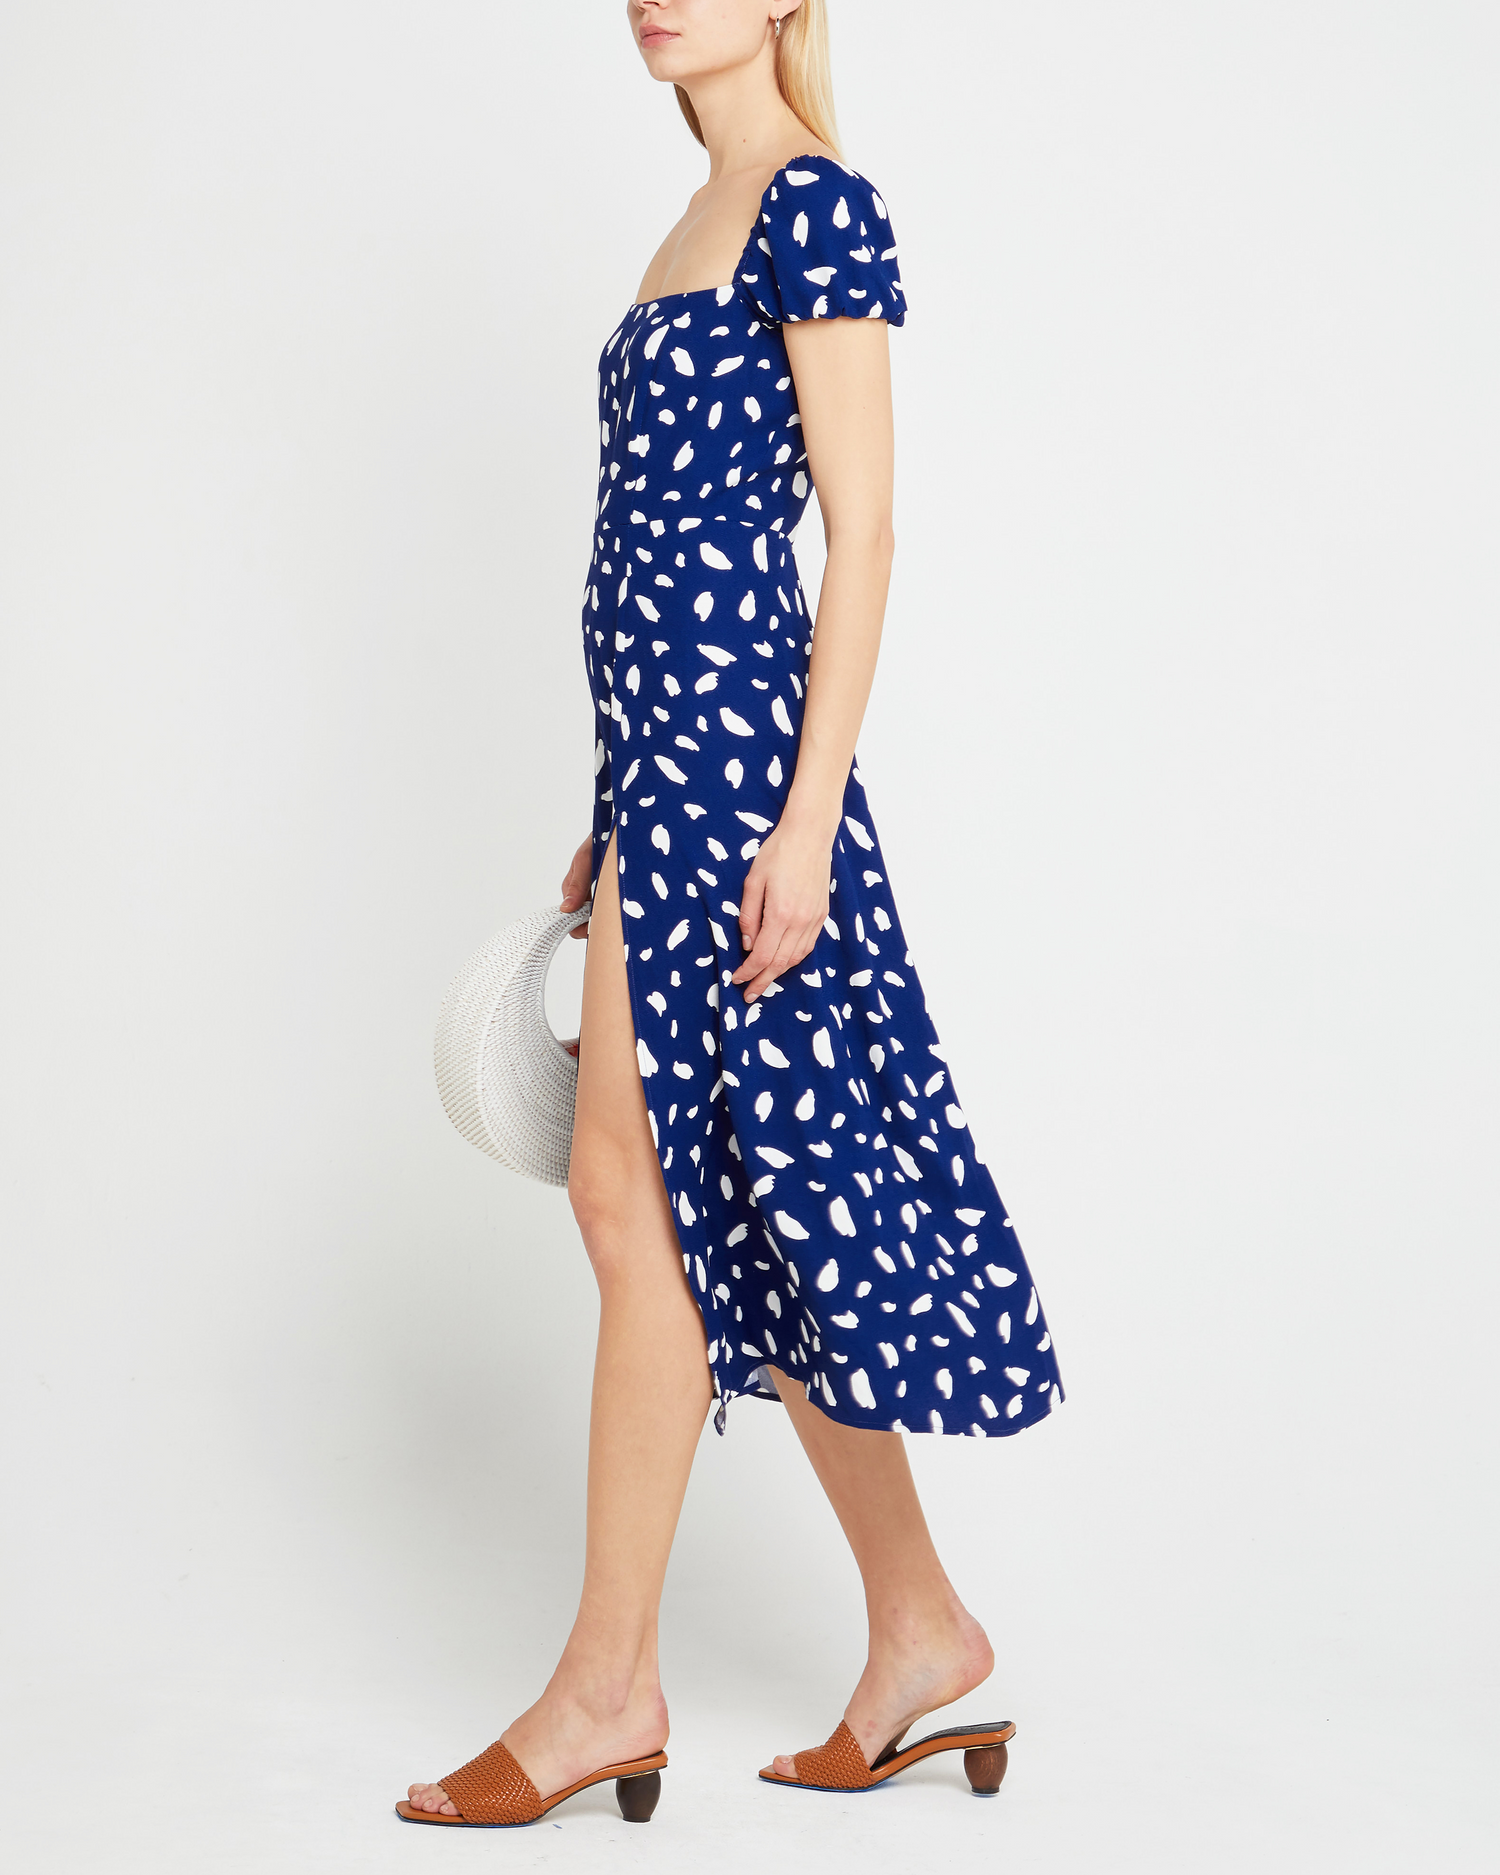 Fourth image of Cyra Dress, a blue midi dress, white polka dot, cap sleeves, side slit, square neckline